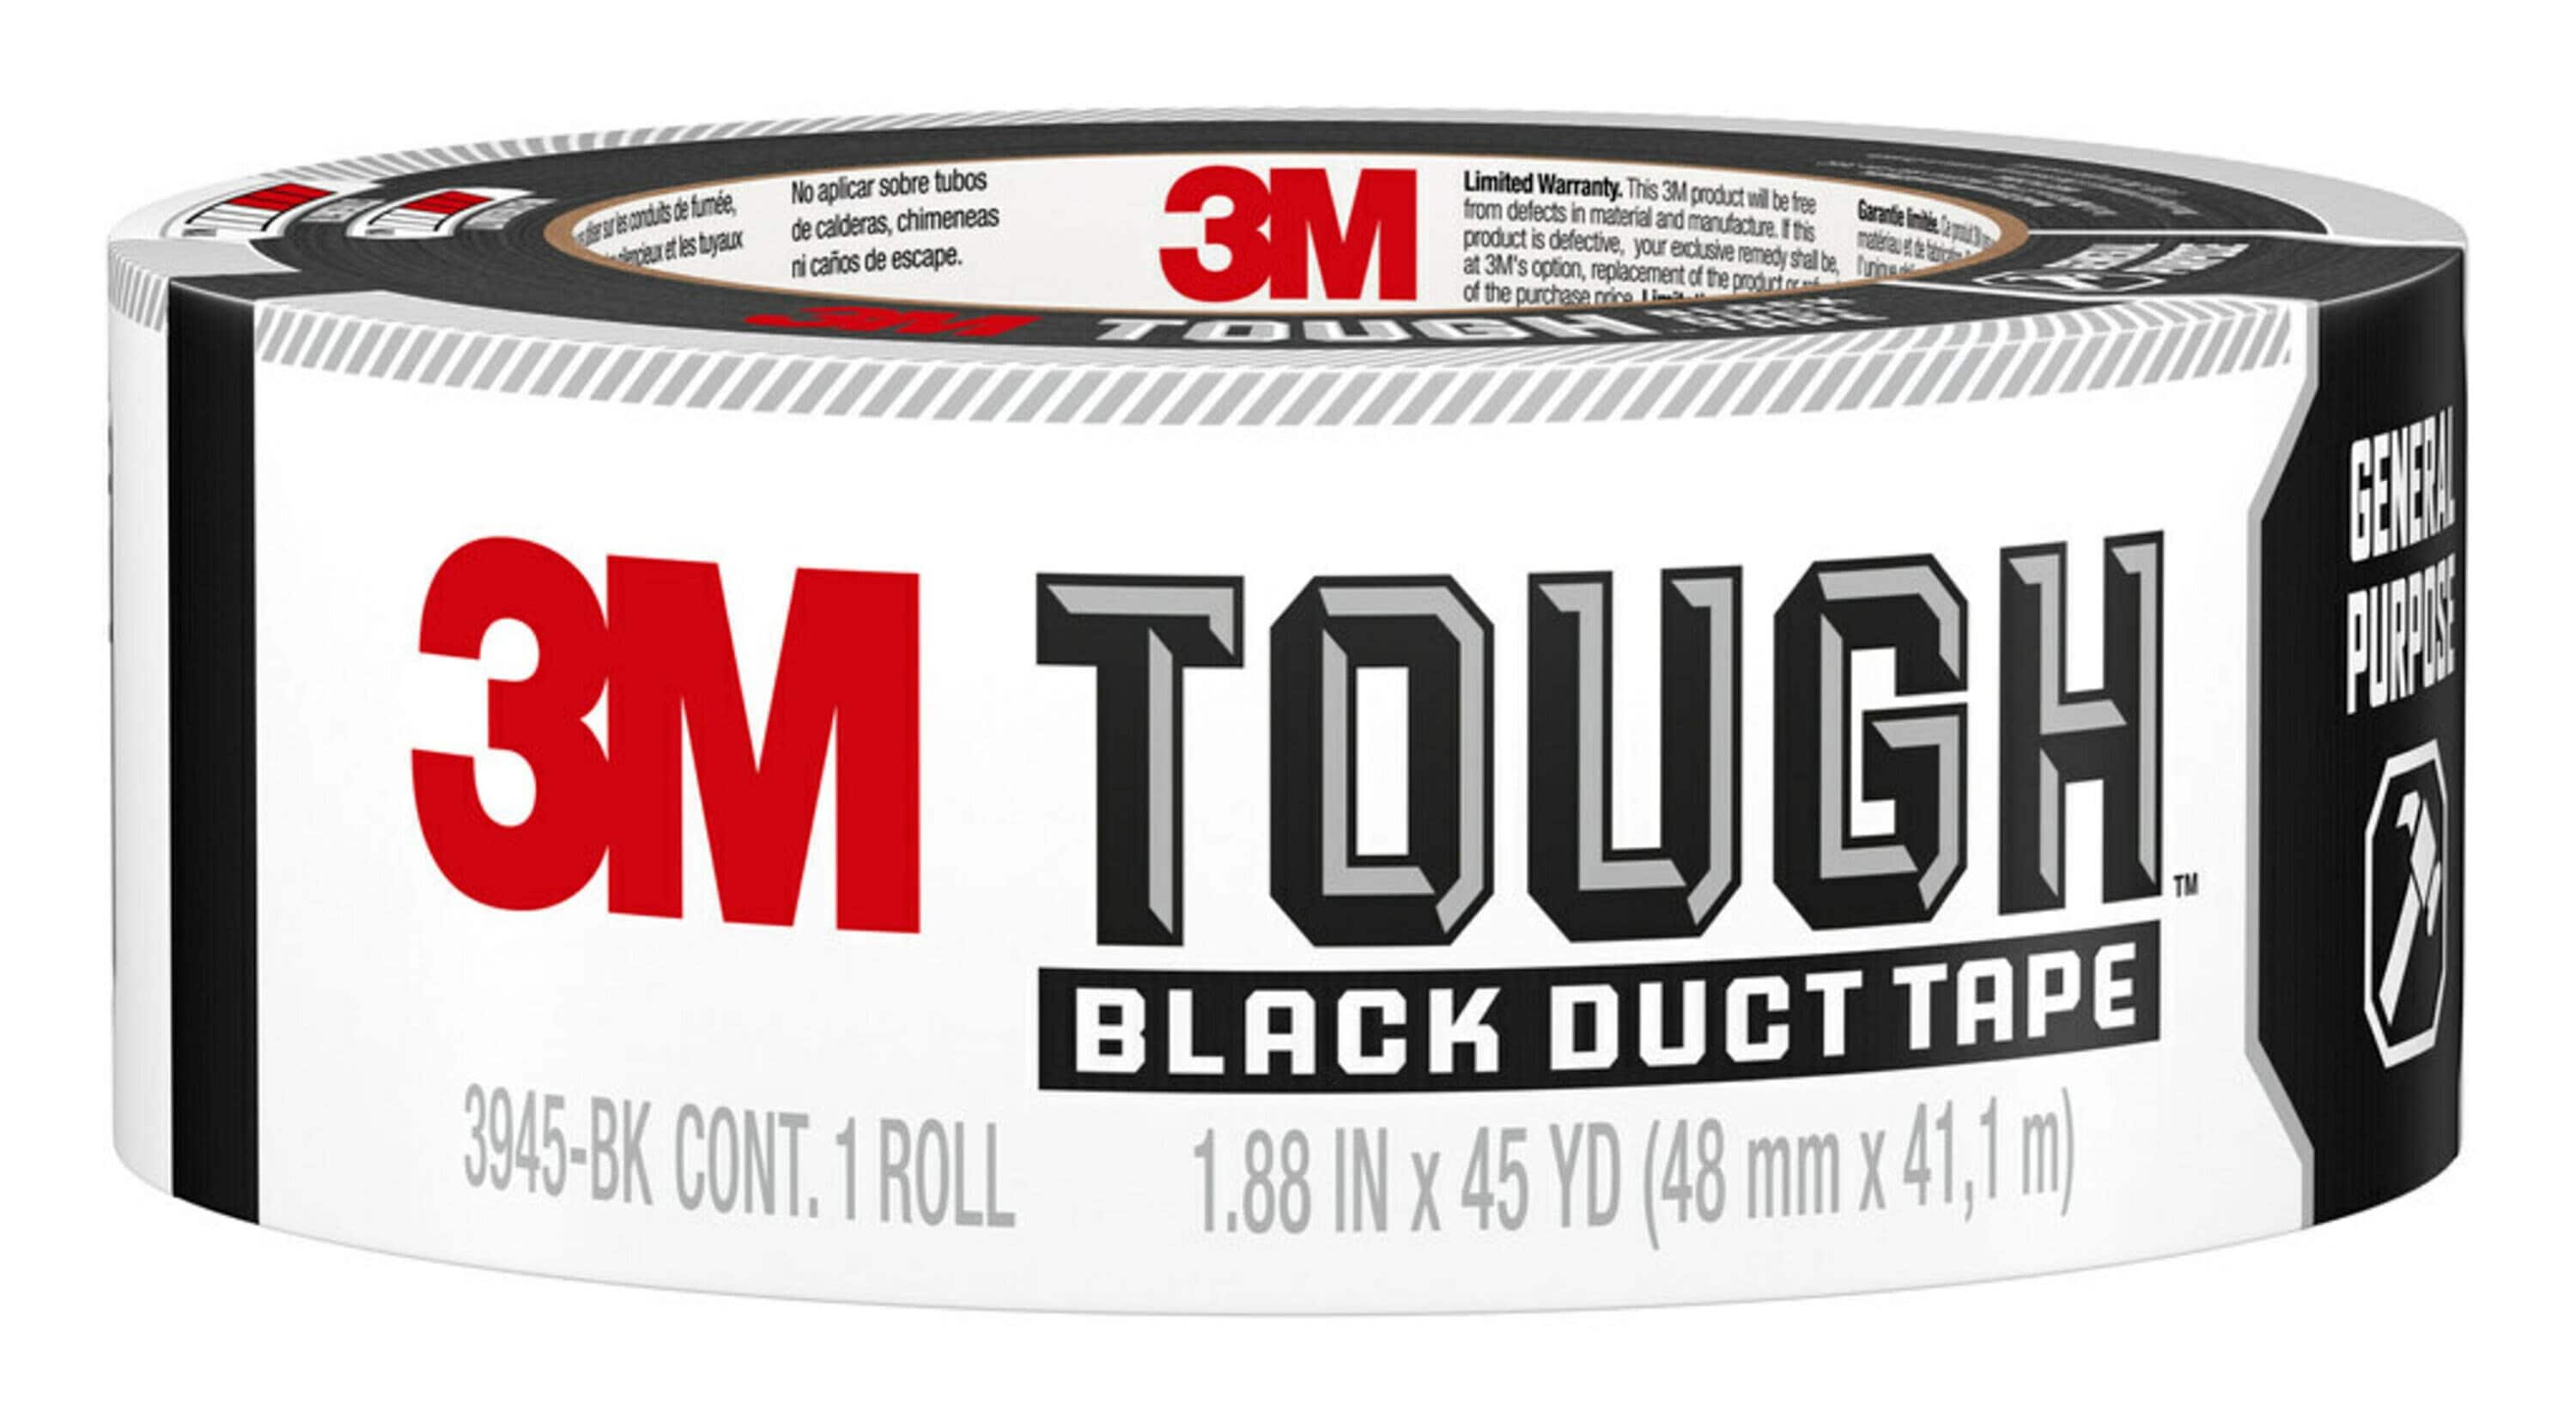 YMMV - $2.87 - 3M Duct Tape General Purpose Utility Black Rubberized Duct Tape 1.88-in x 45 Yard s 3945-BK